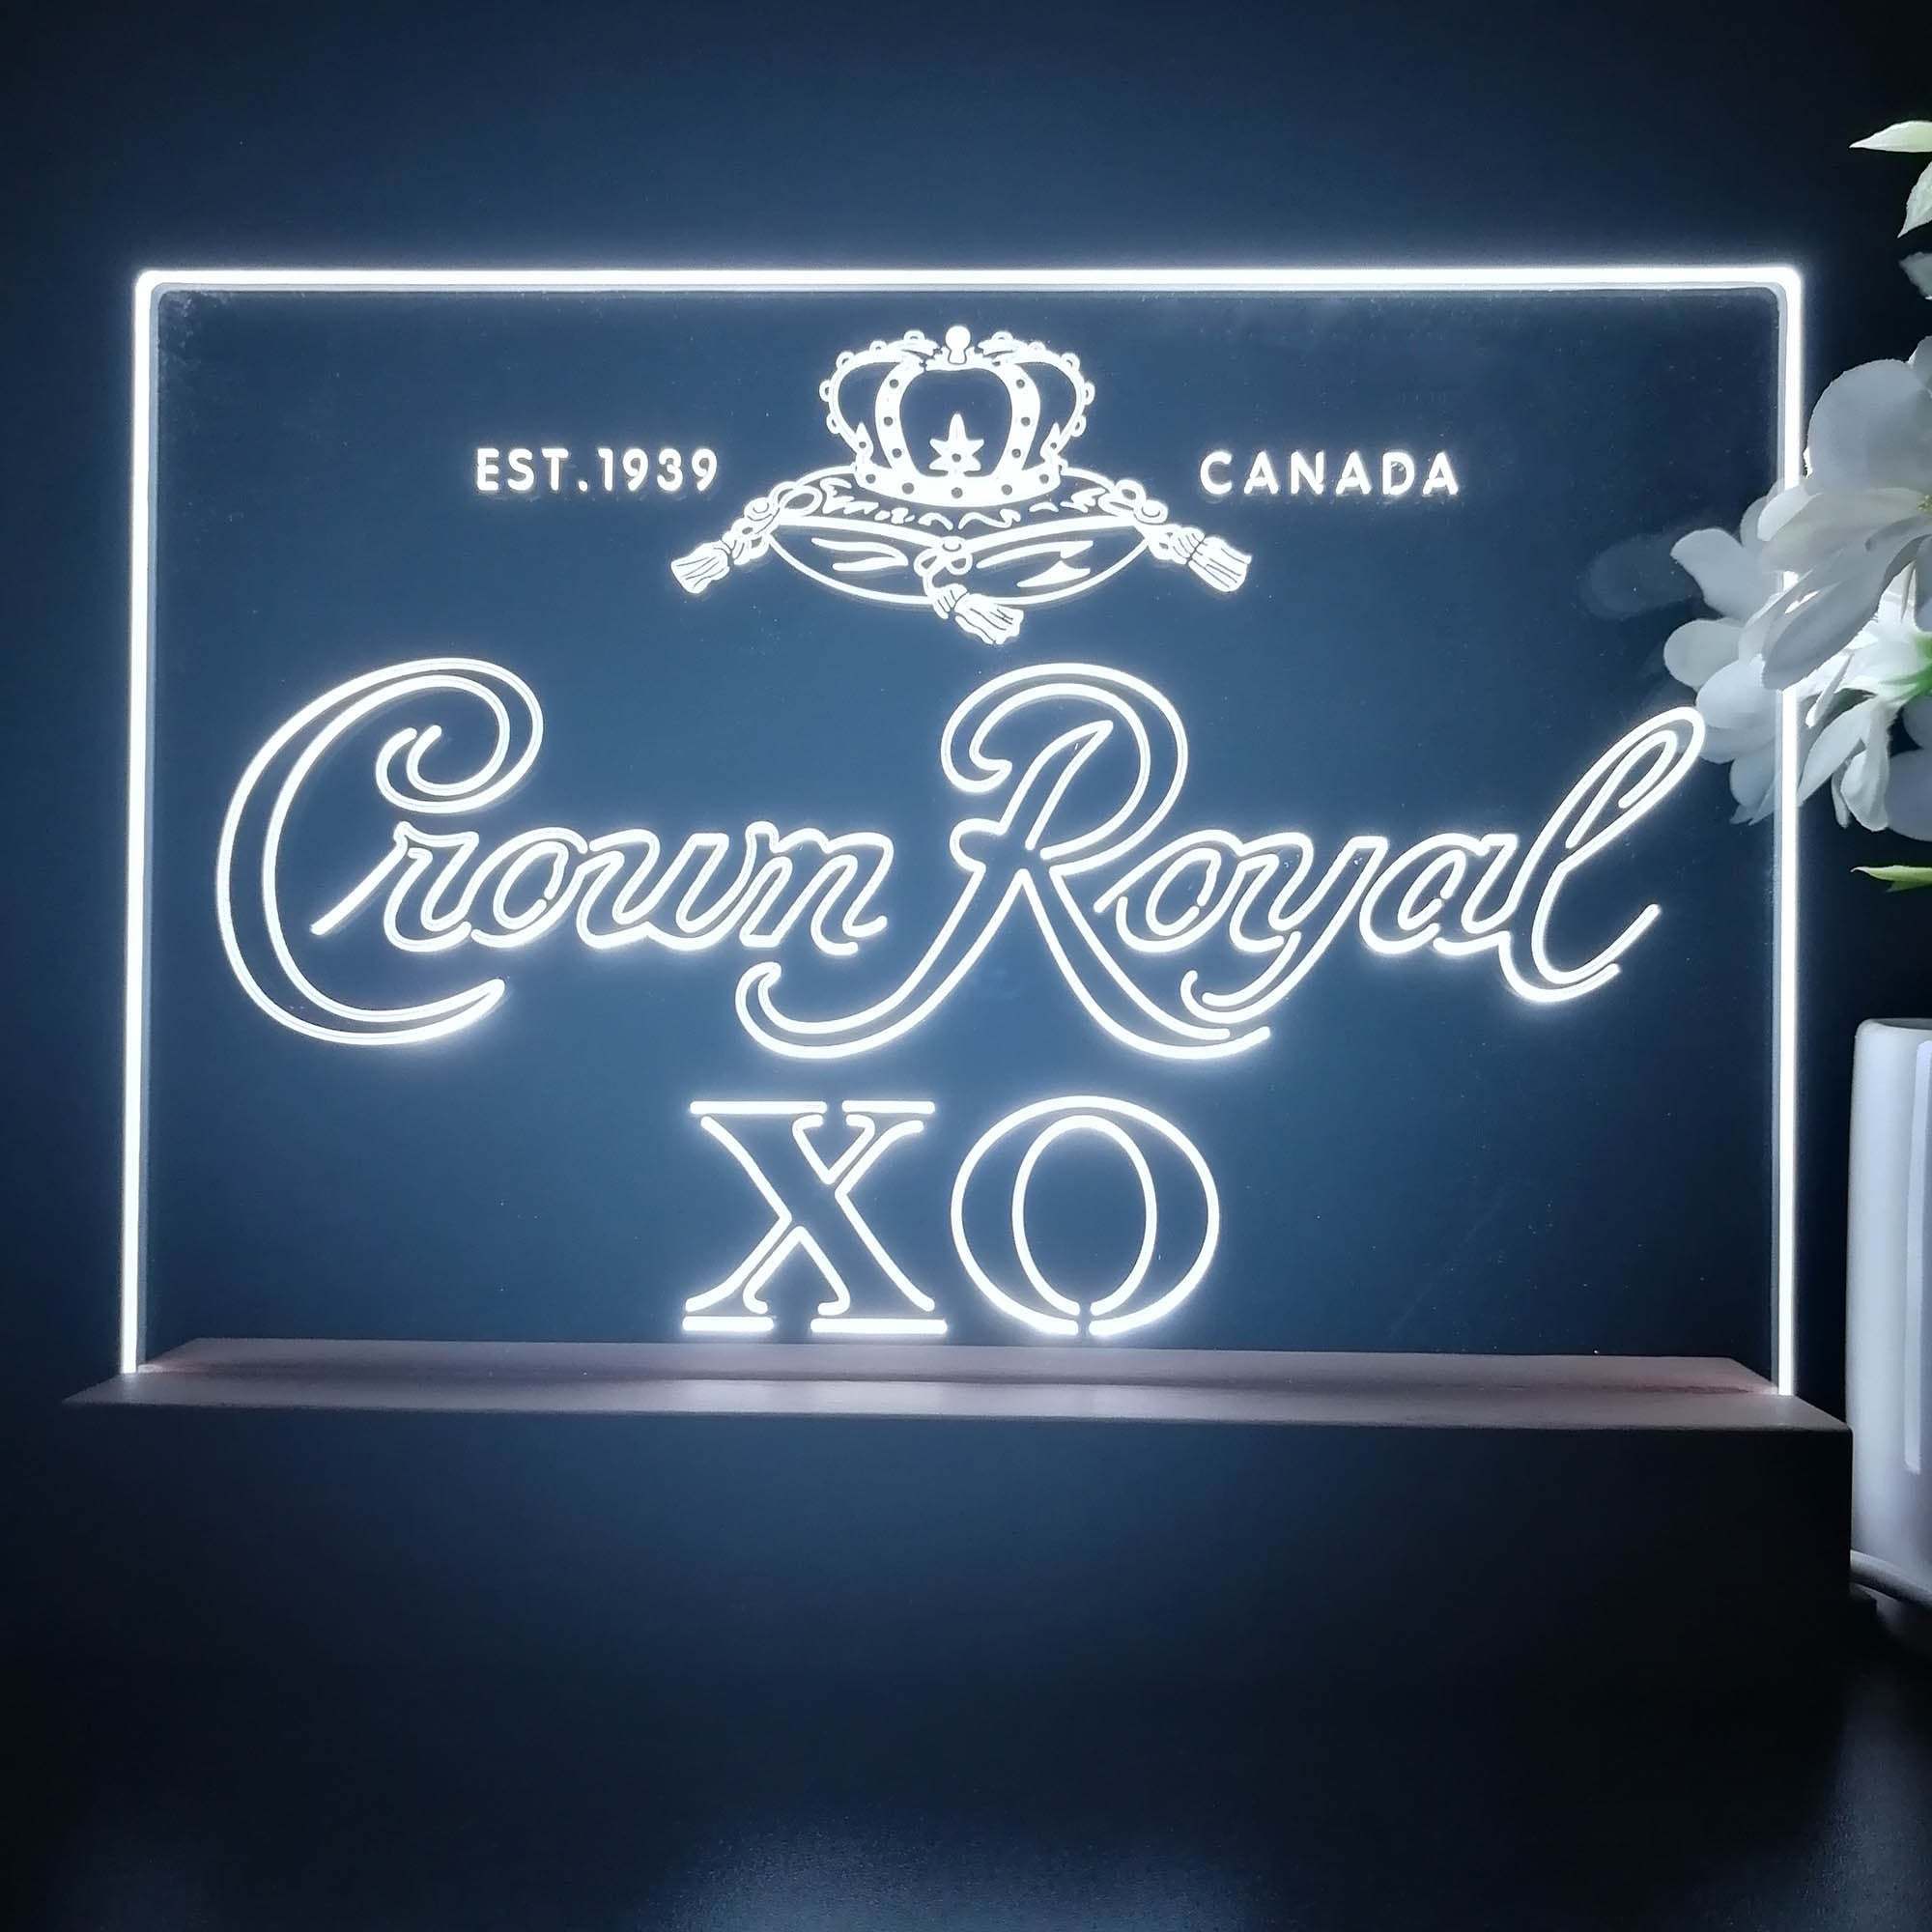 Crown Royal XO Neon Sign Pub Bar Lamp